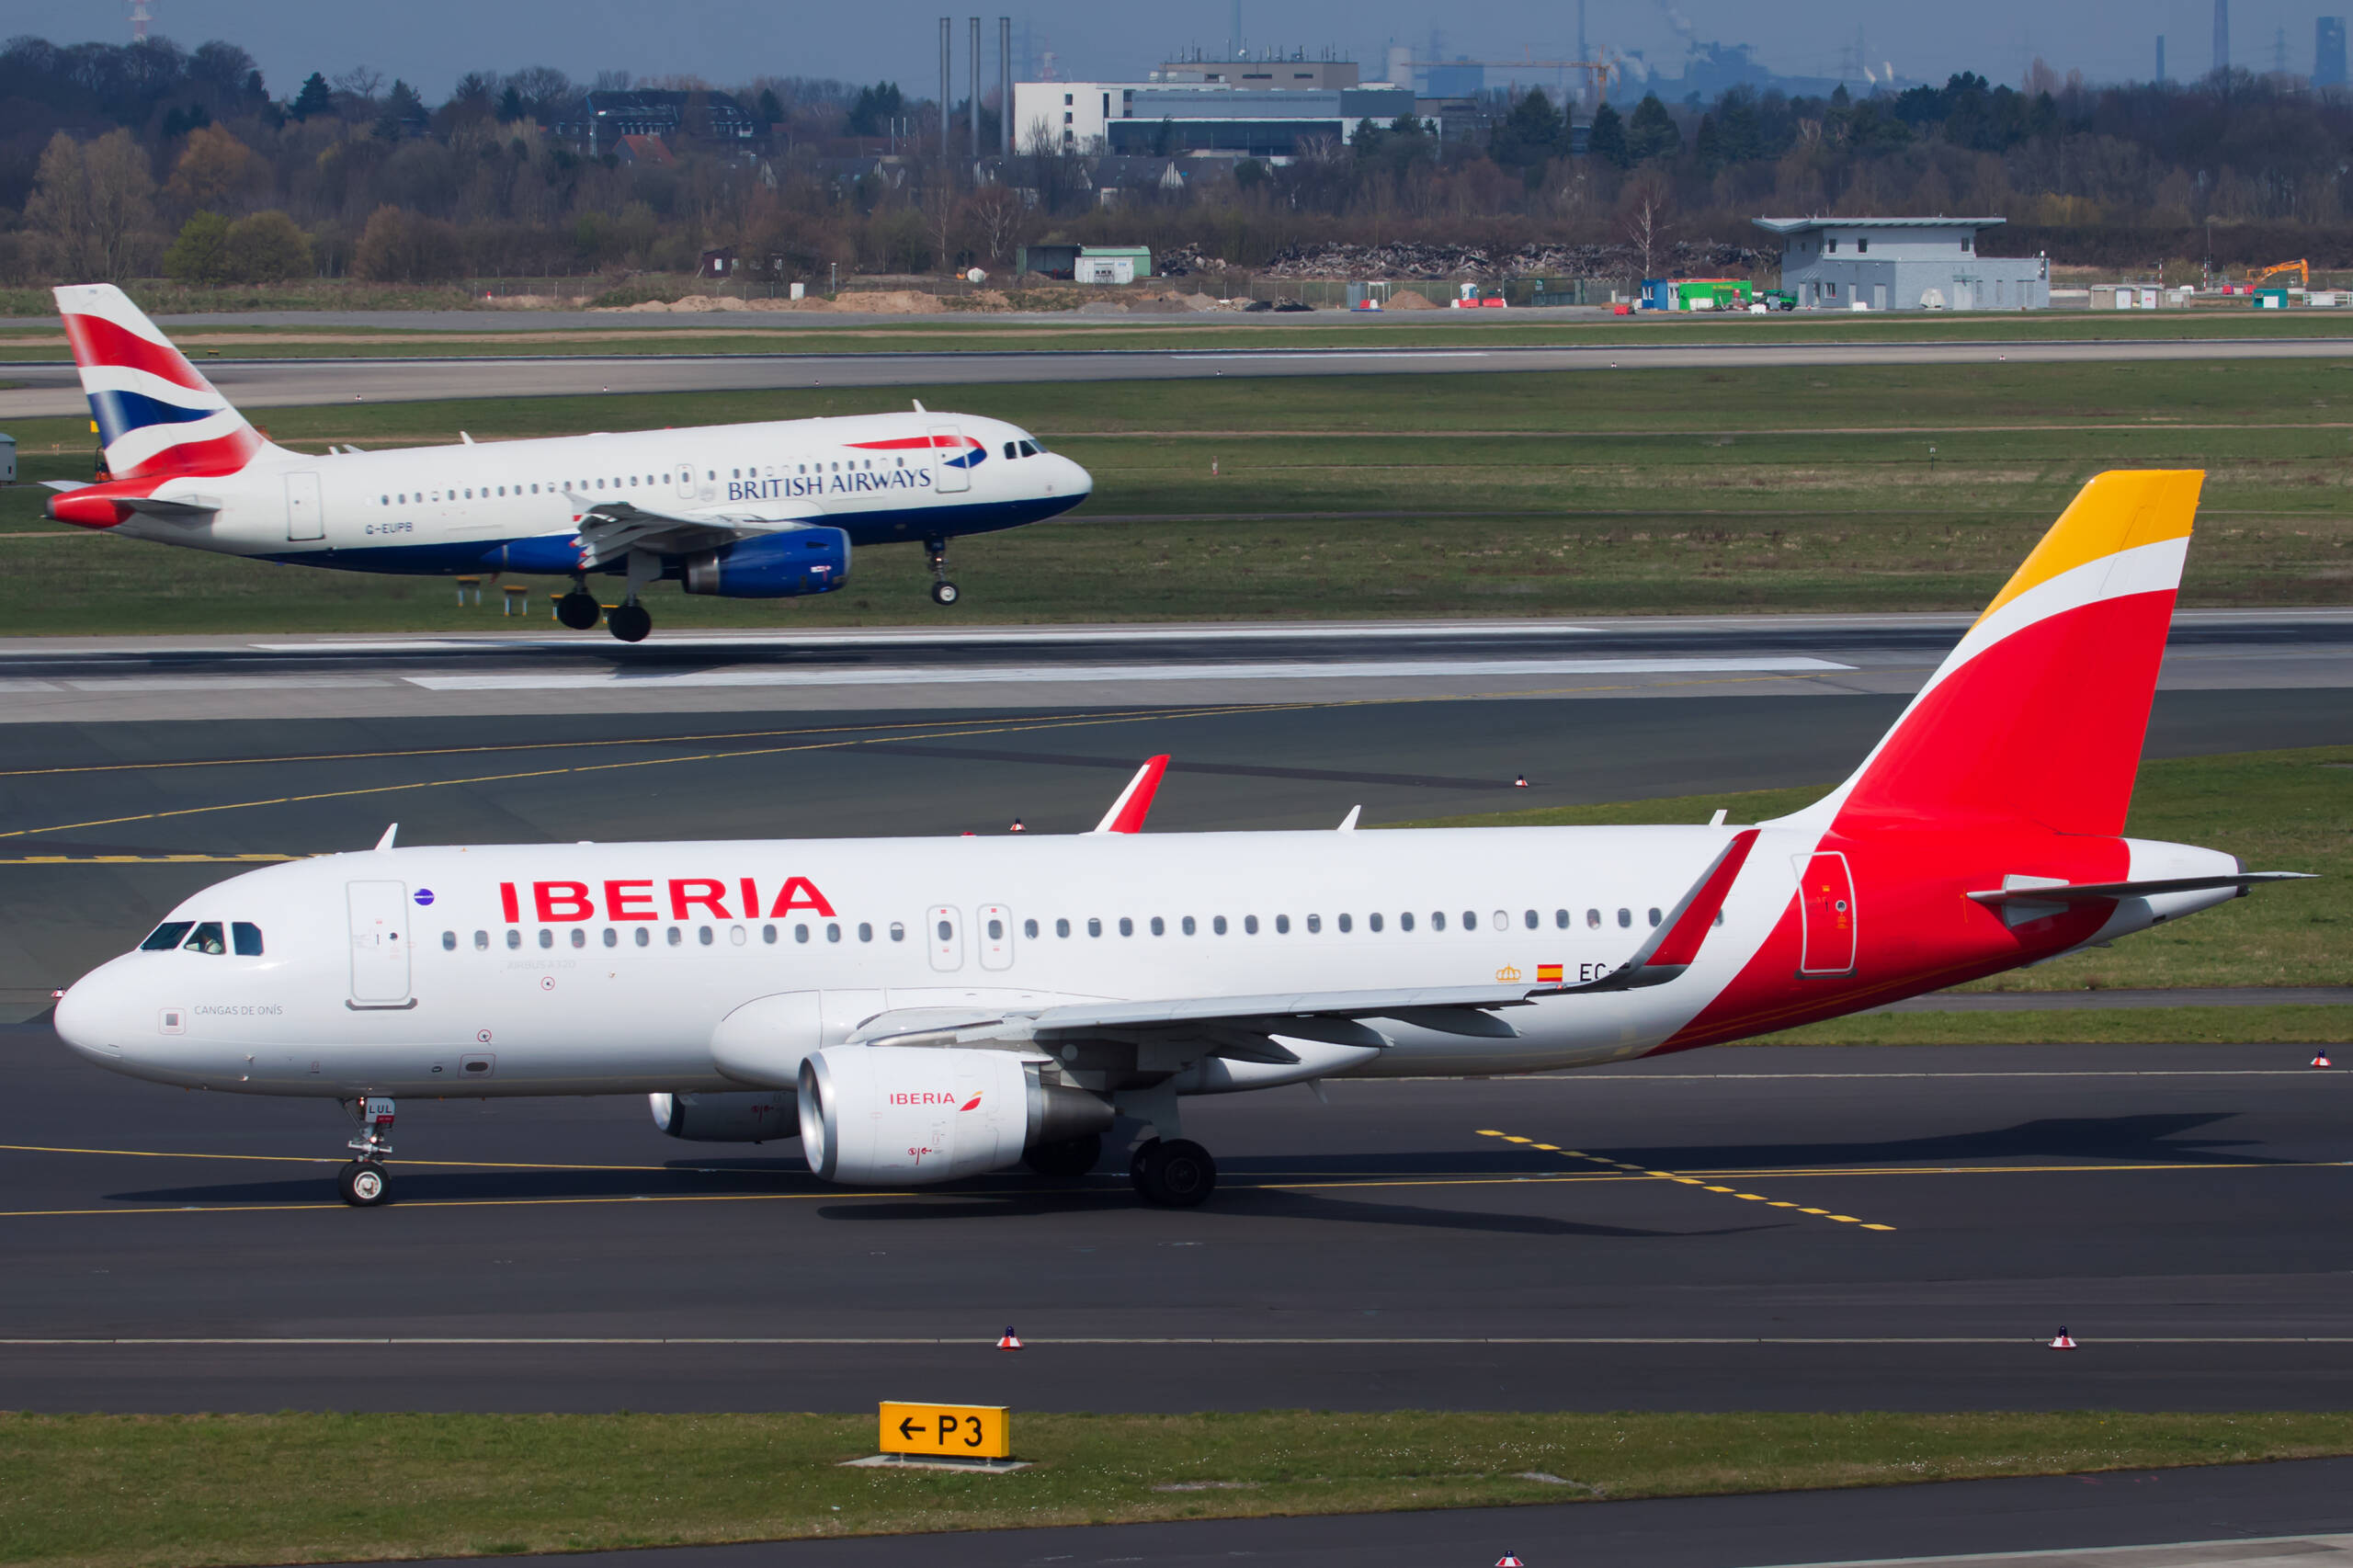 Iberia and British airways planes on the runway